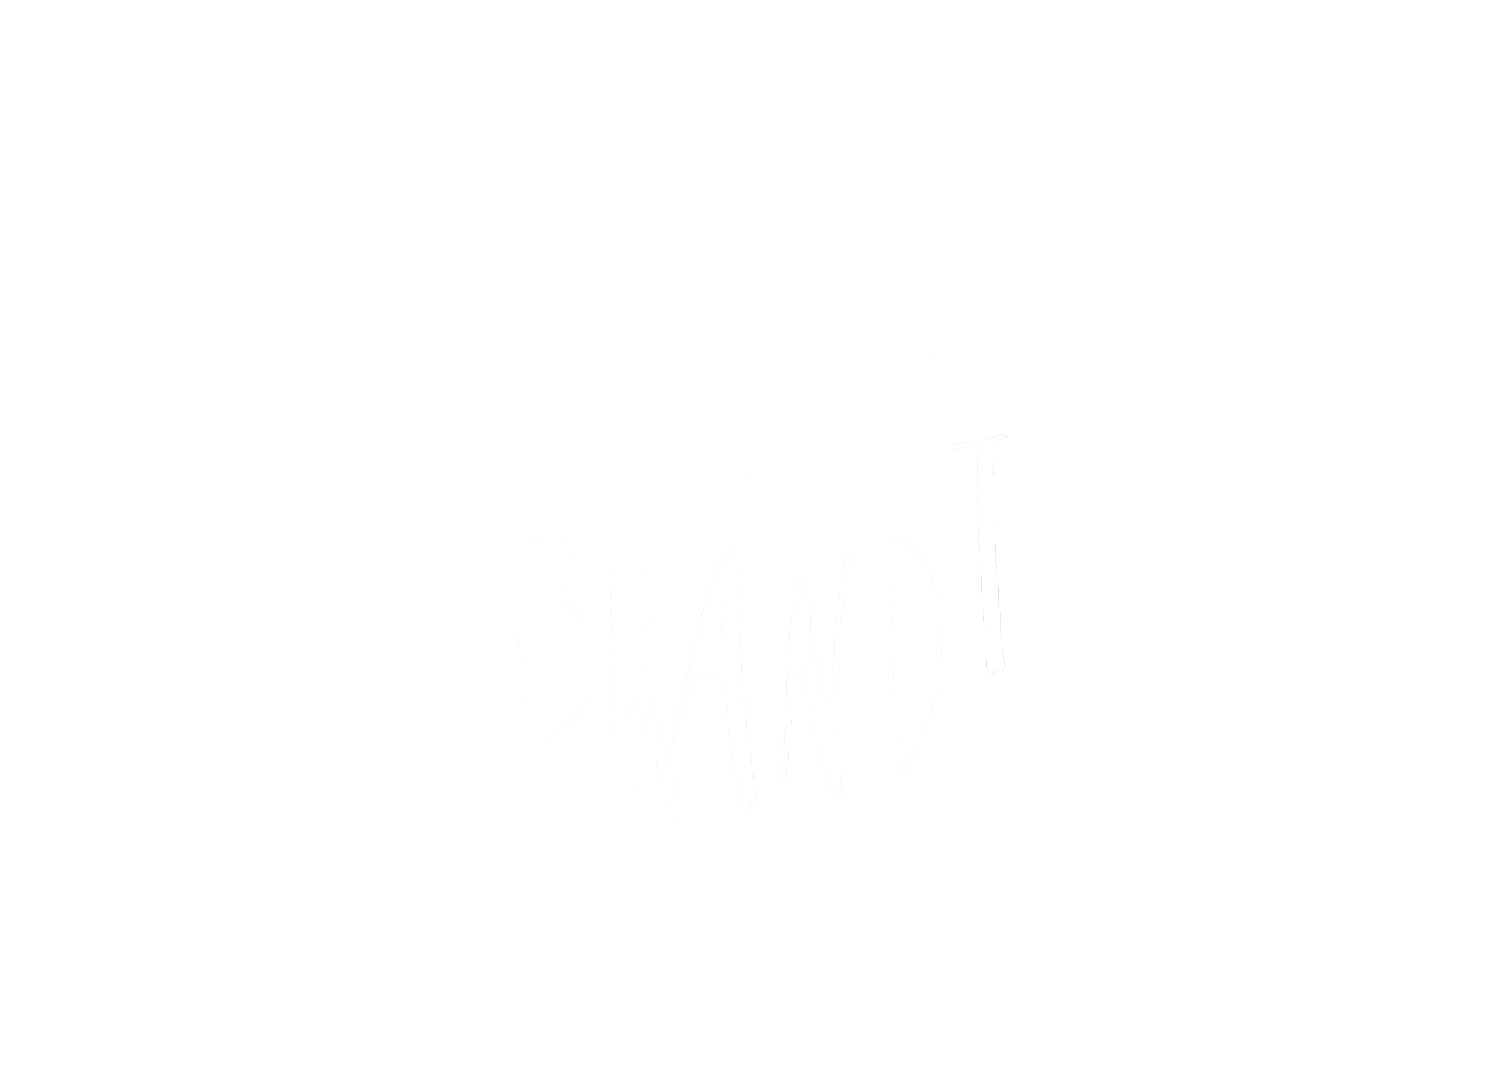 Cole Brandt